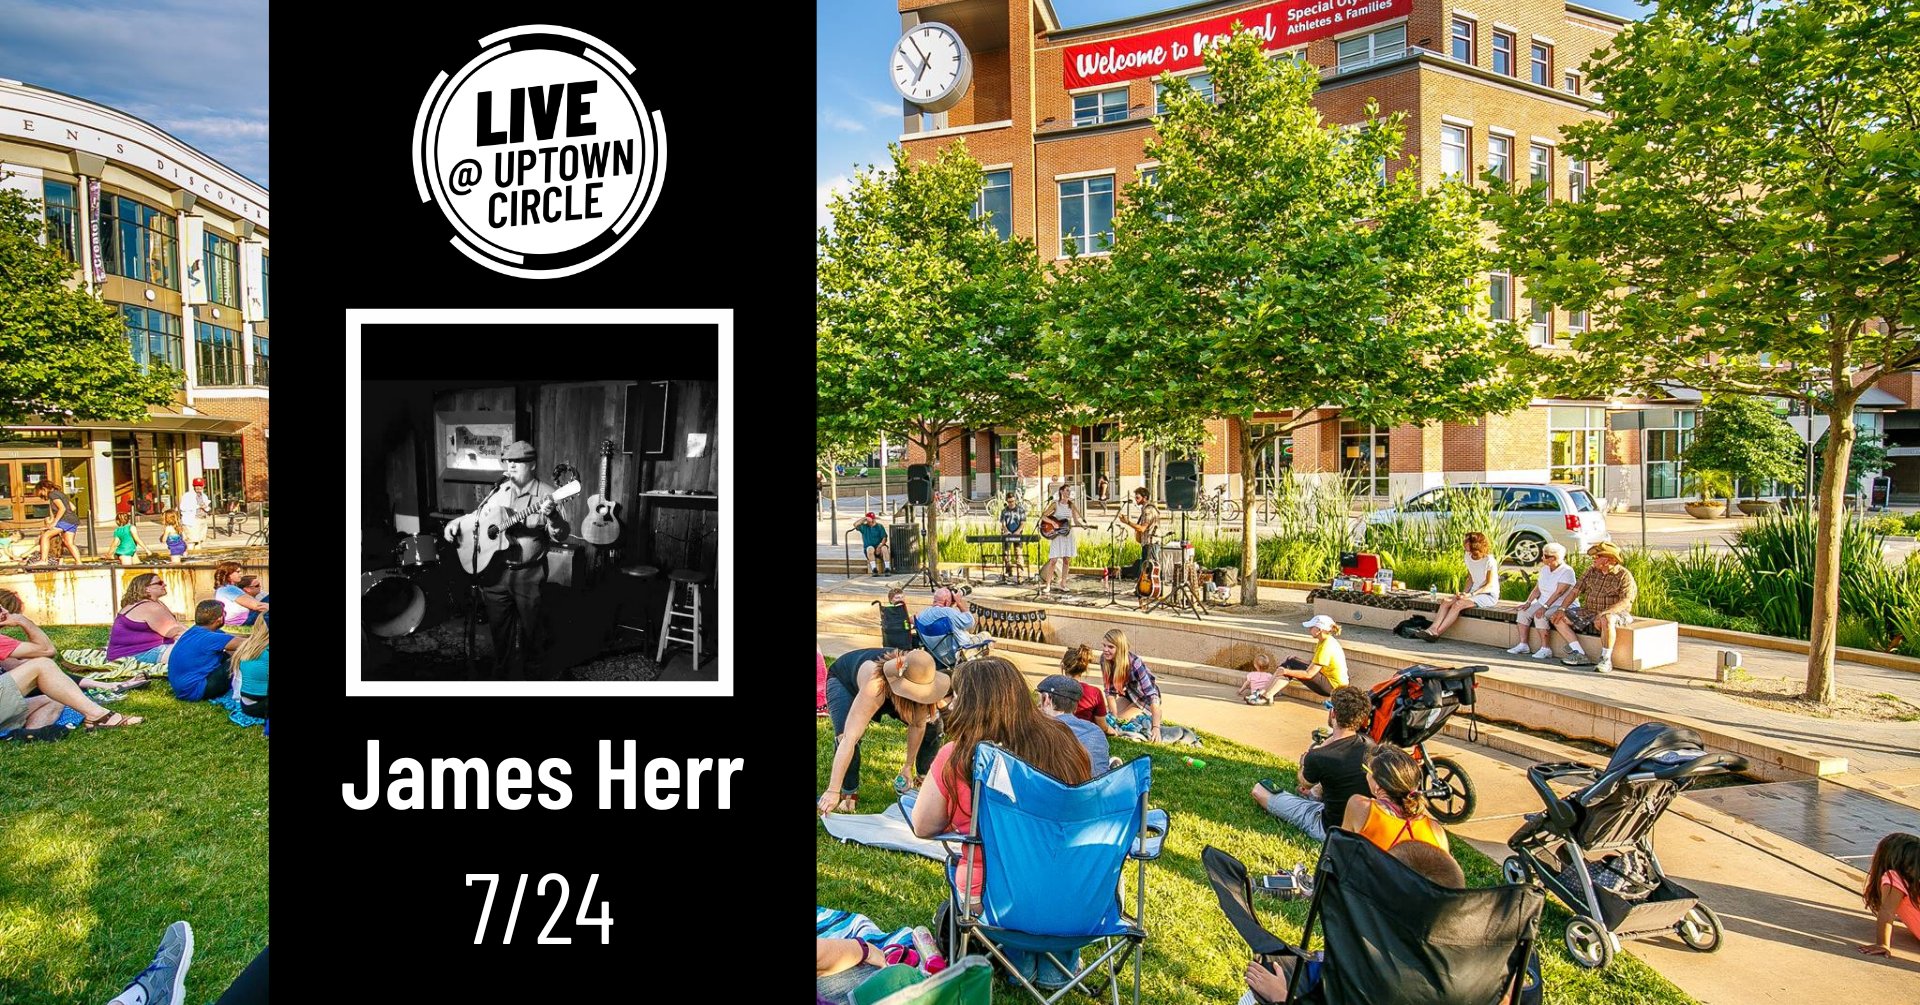 Normal LIVE presents James Herr @ Uptown Circle